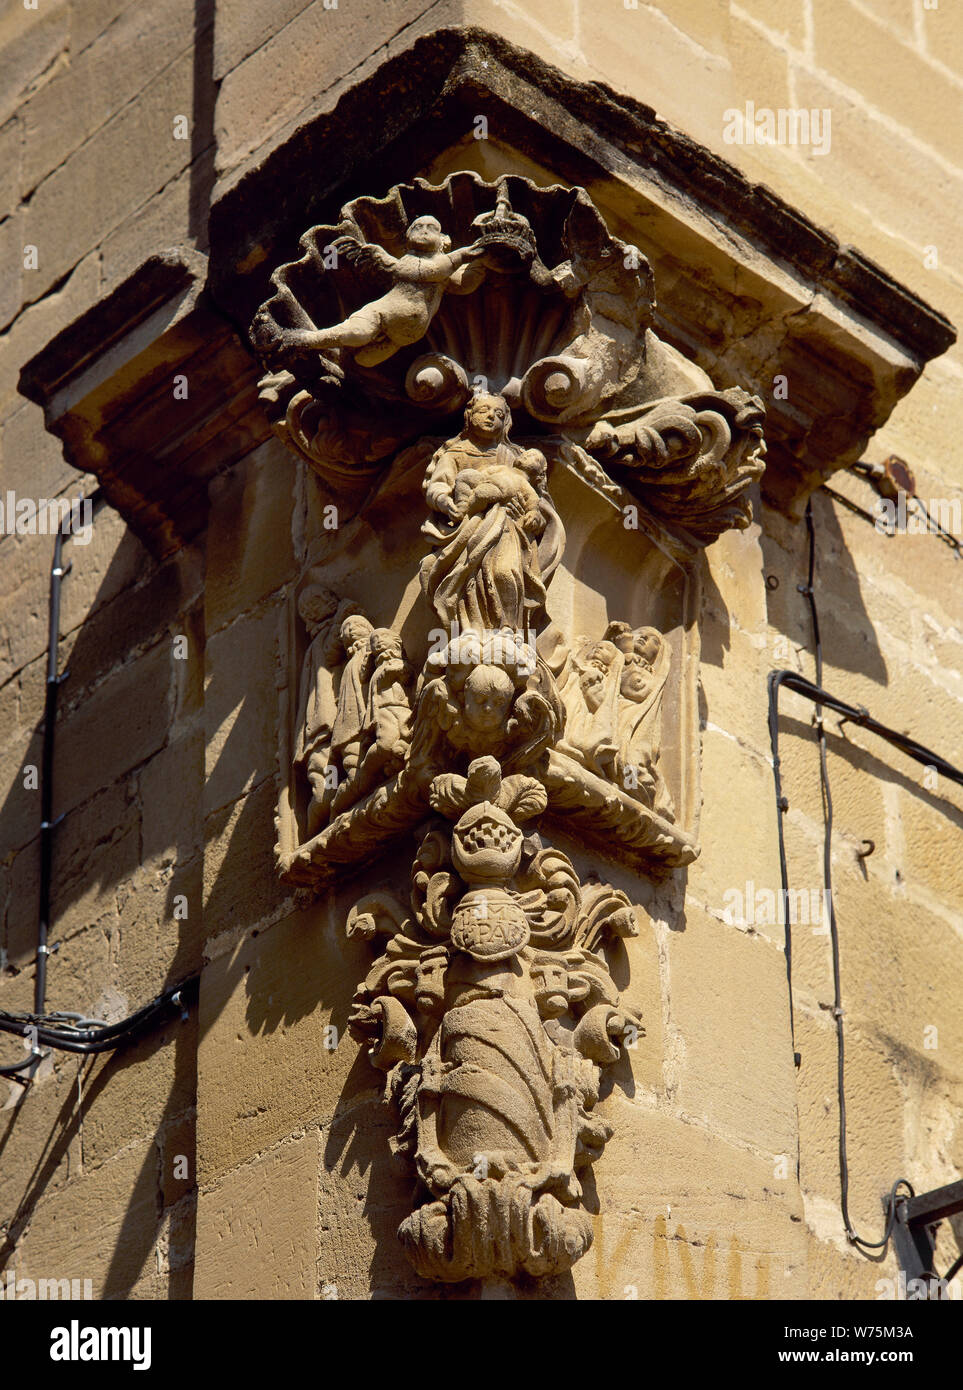 Spain. La Rioja. Cuzcurrita del Rio Tiron. Sculptural detail, religious theme, on the cornerstone of a building. Stock Photo